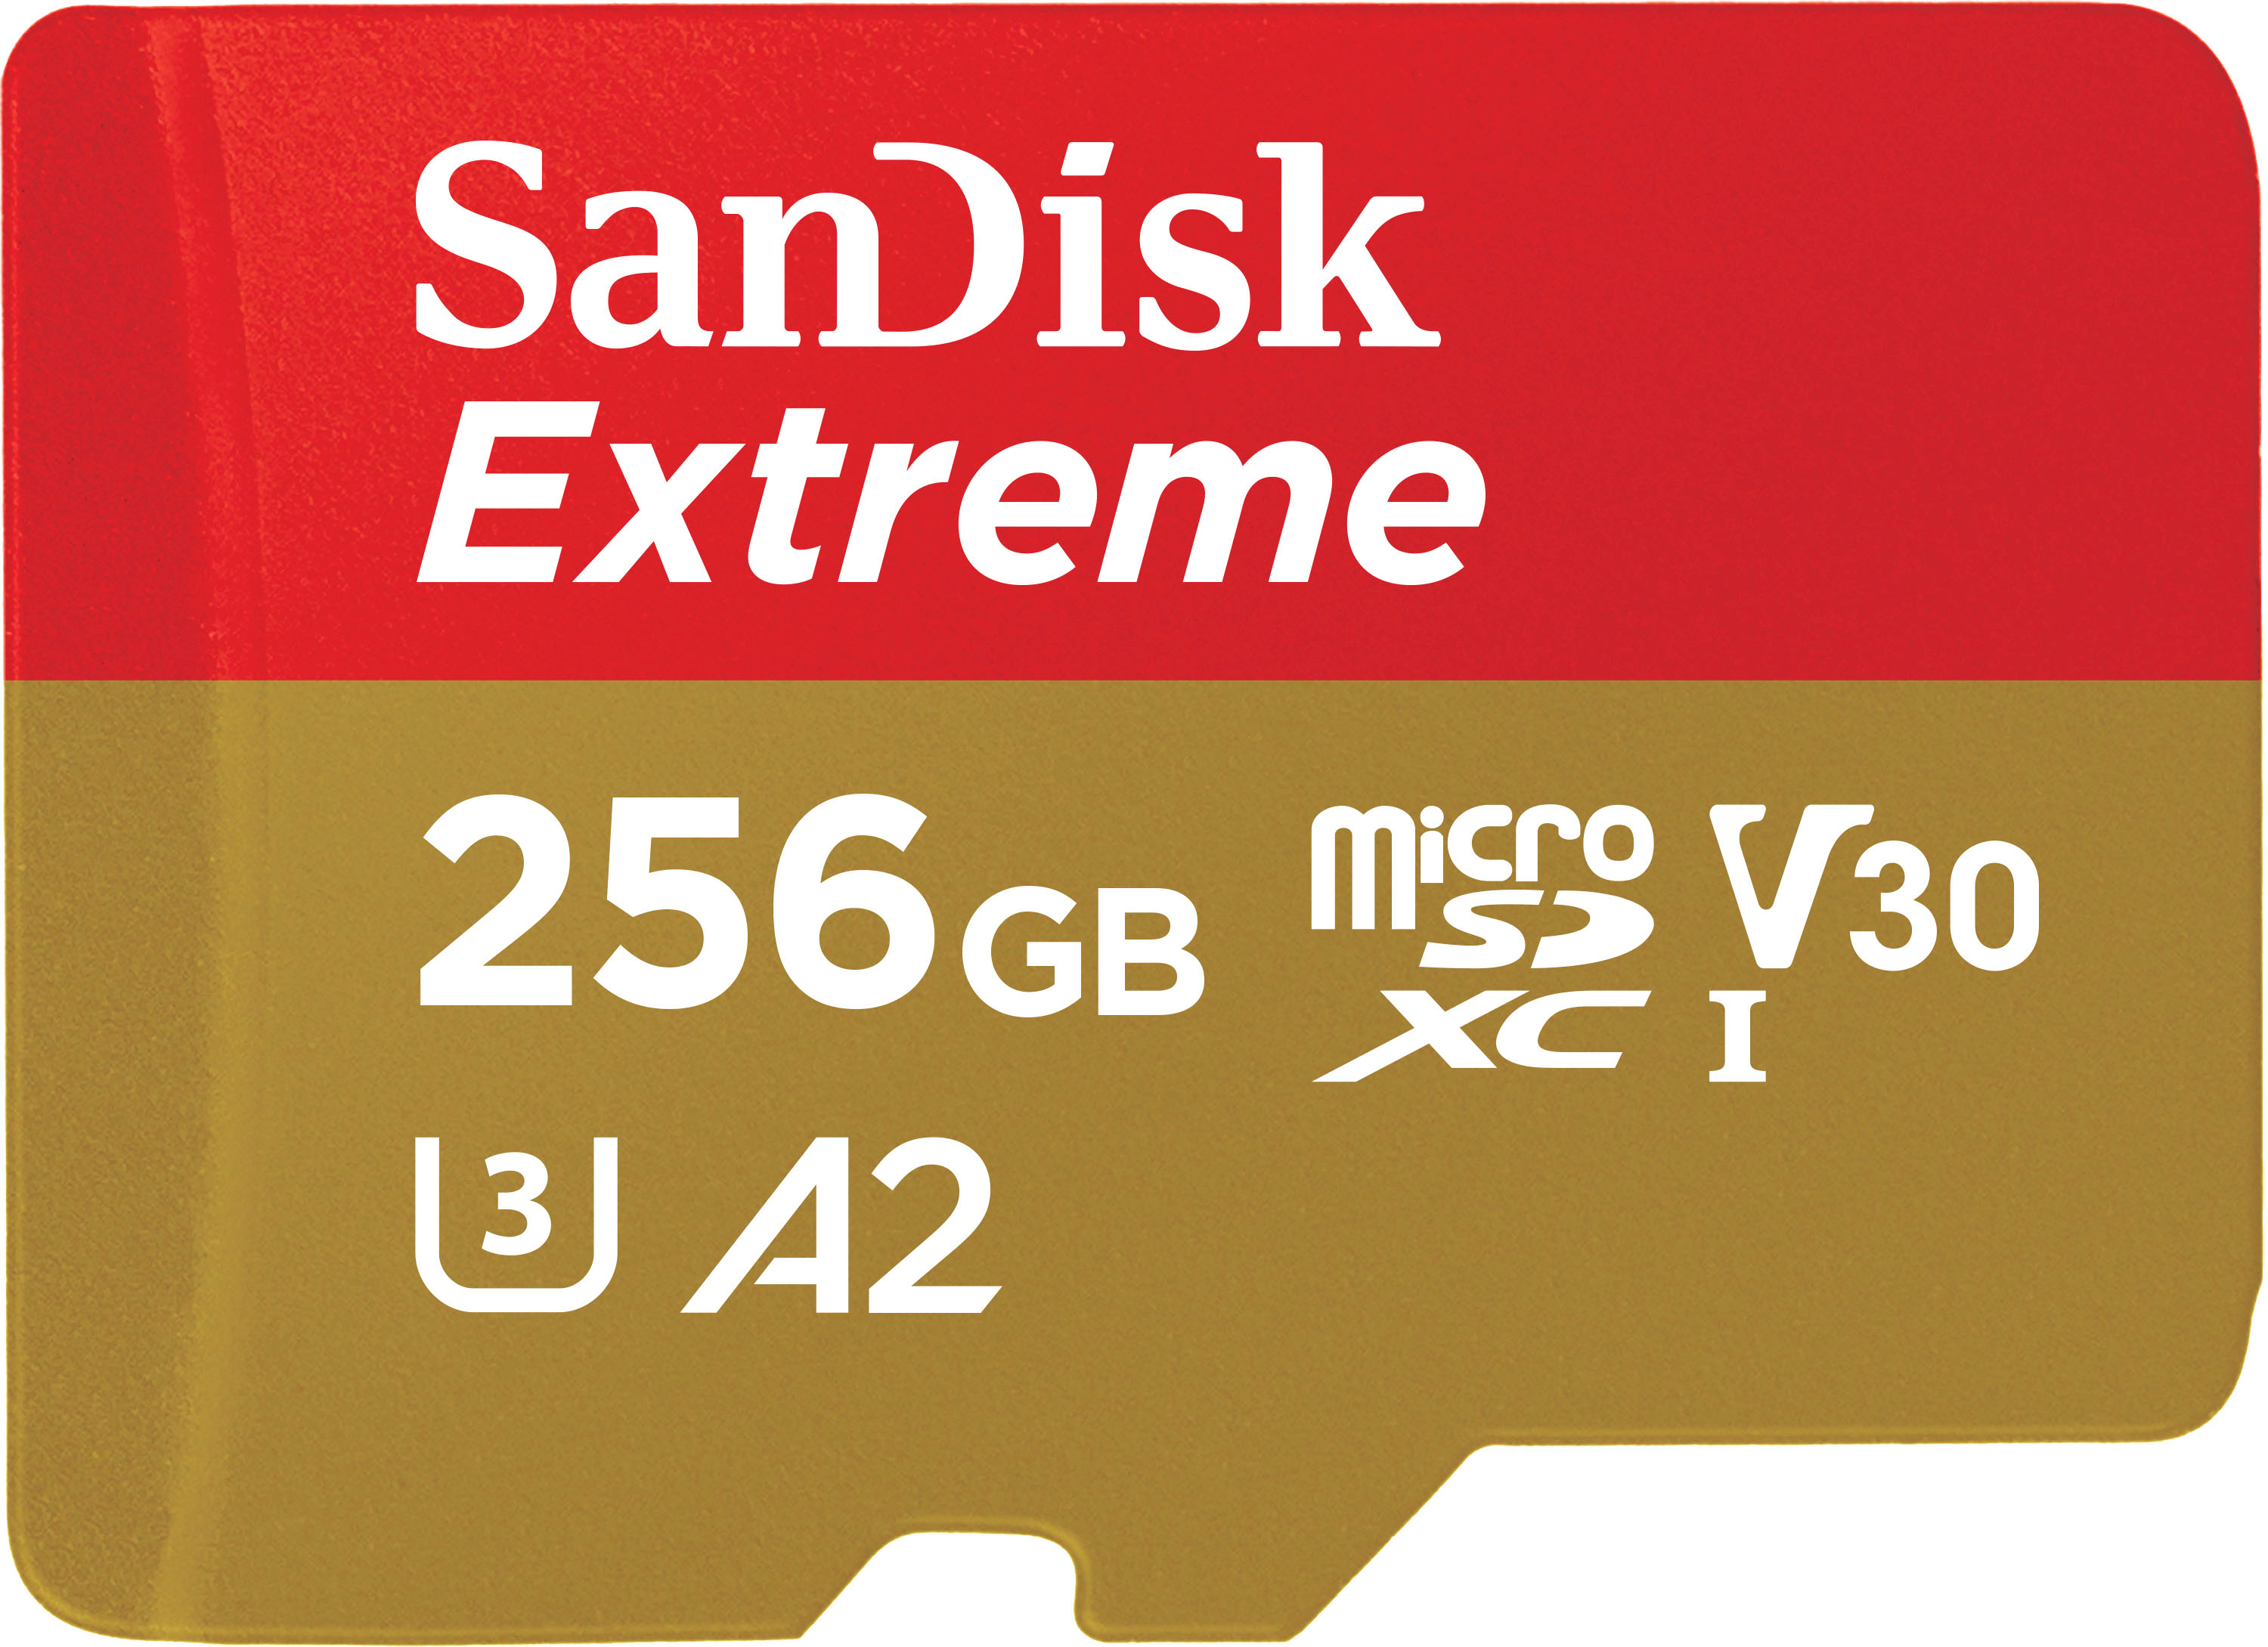 SanDisk 256GB microSDXC Card for Nintendo Switch With 200 Nintendo